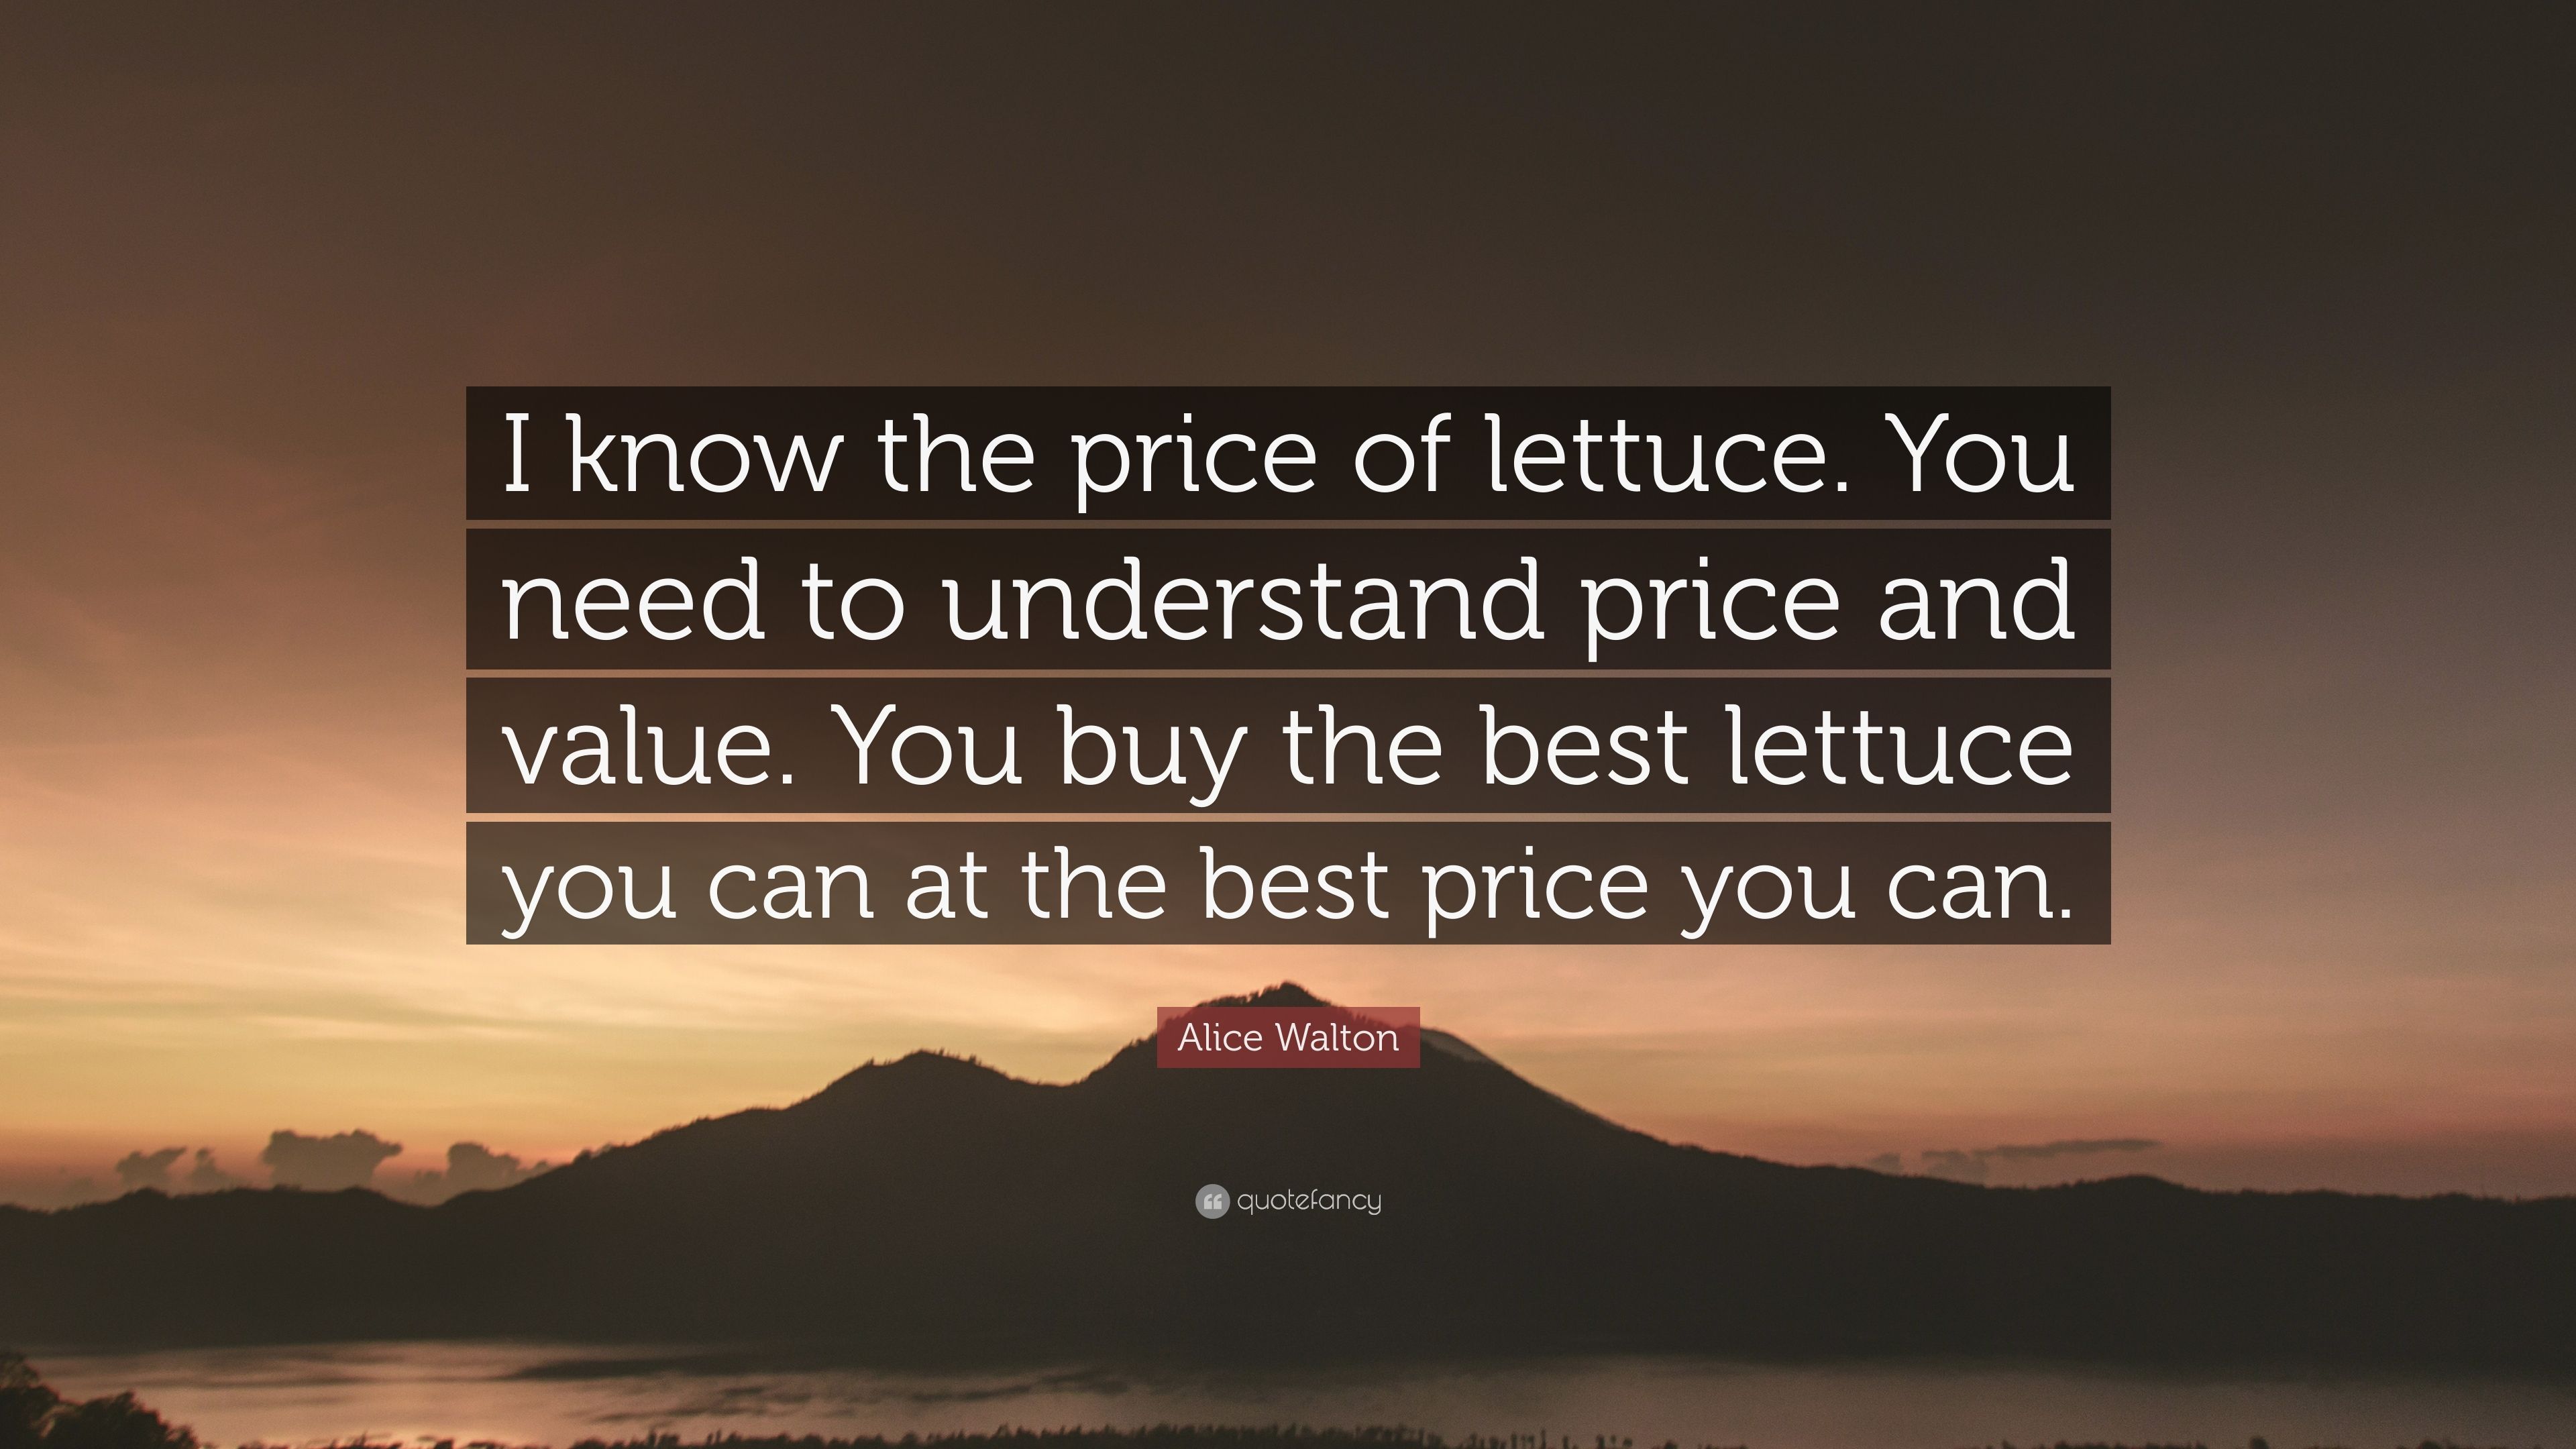 Alice Walton Quote: "I know the price of lettuce. 